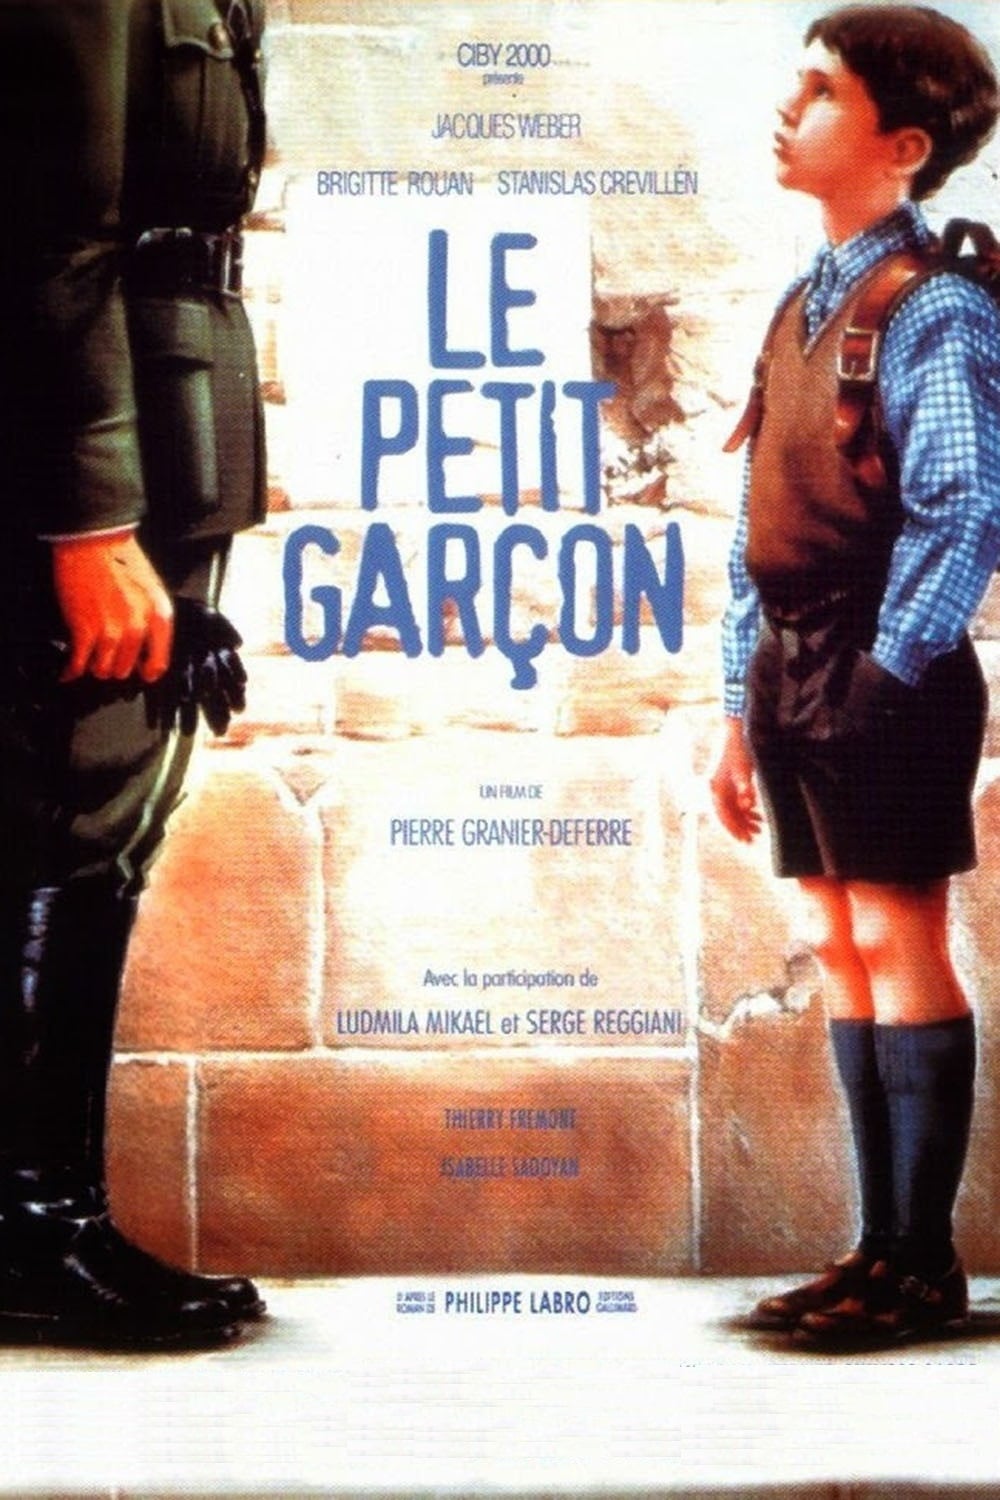 Le petit garçon (1995)